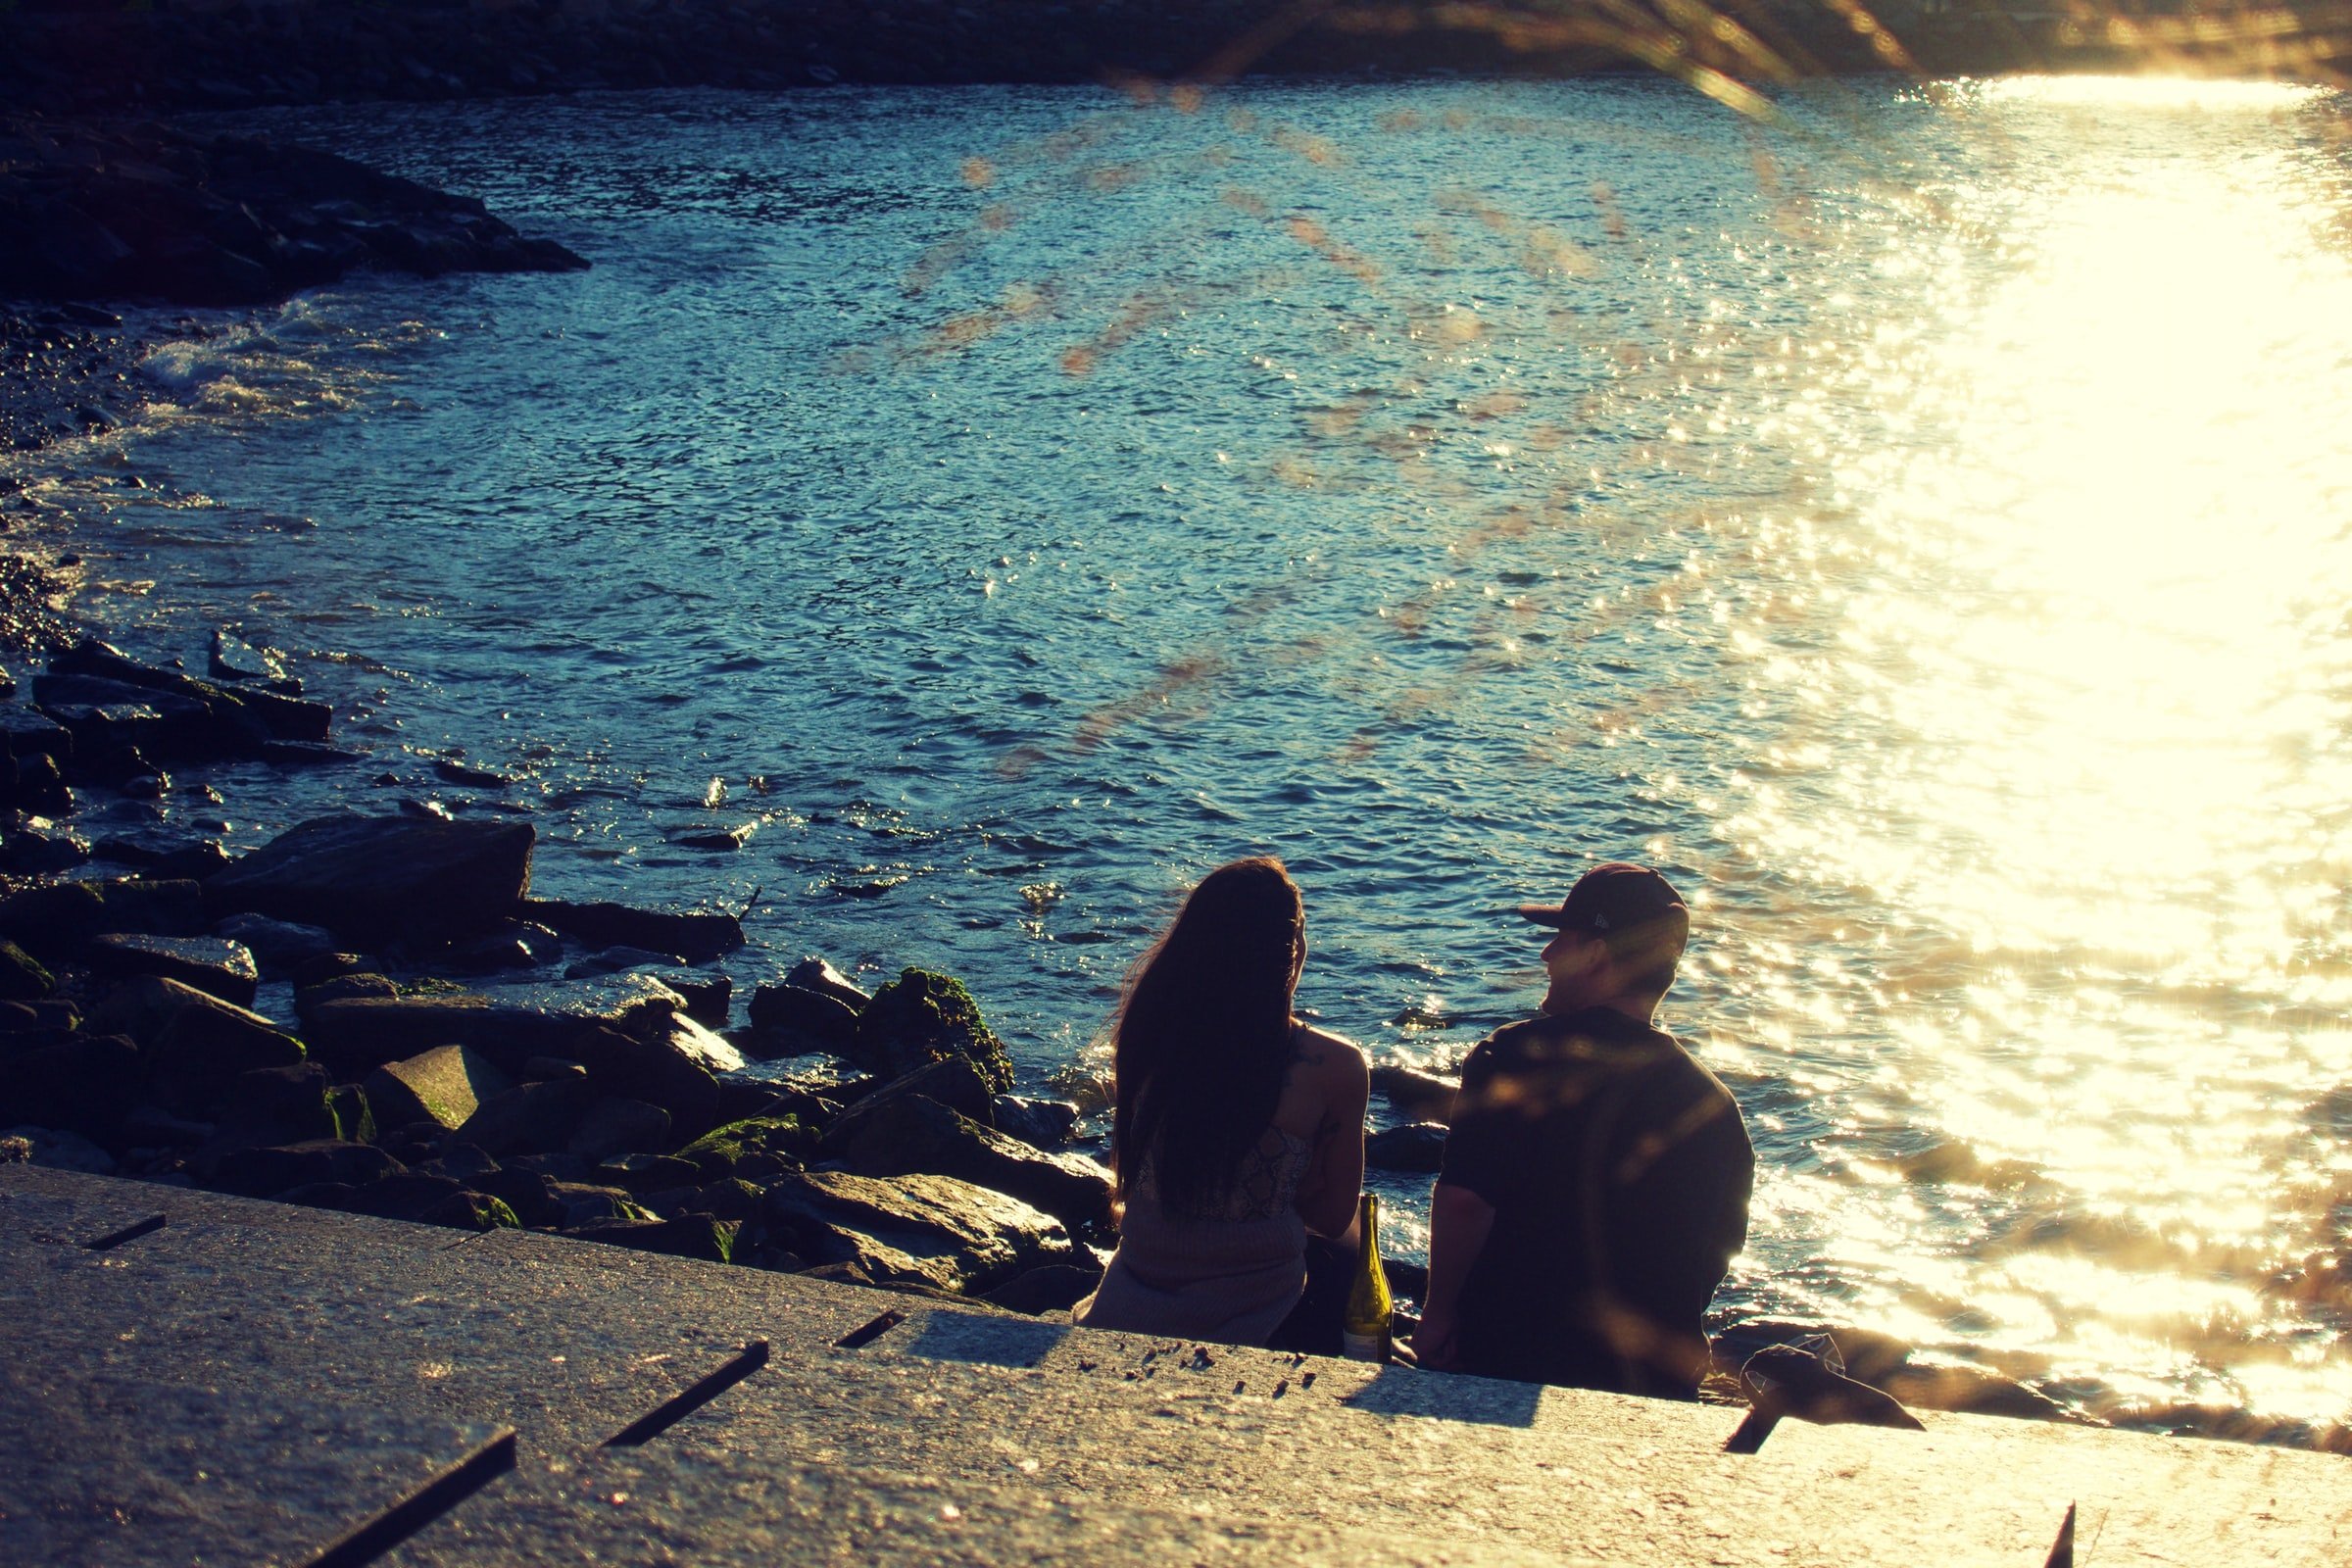 A couple sitting on the rocks near water. | Source: Unsplash